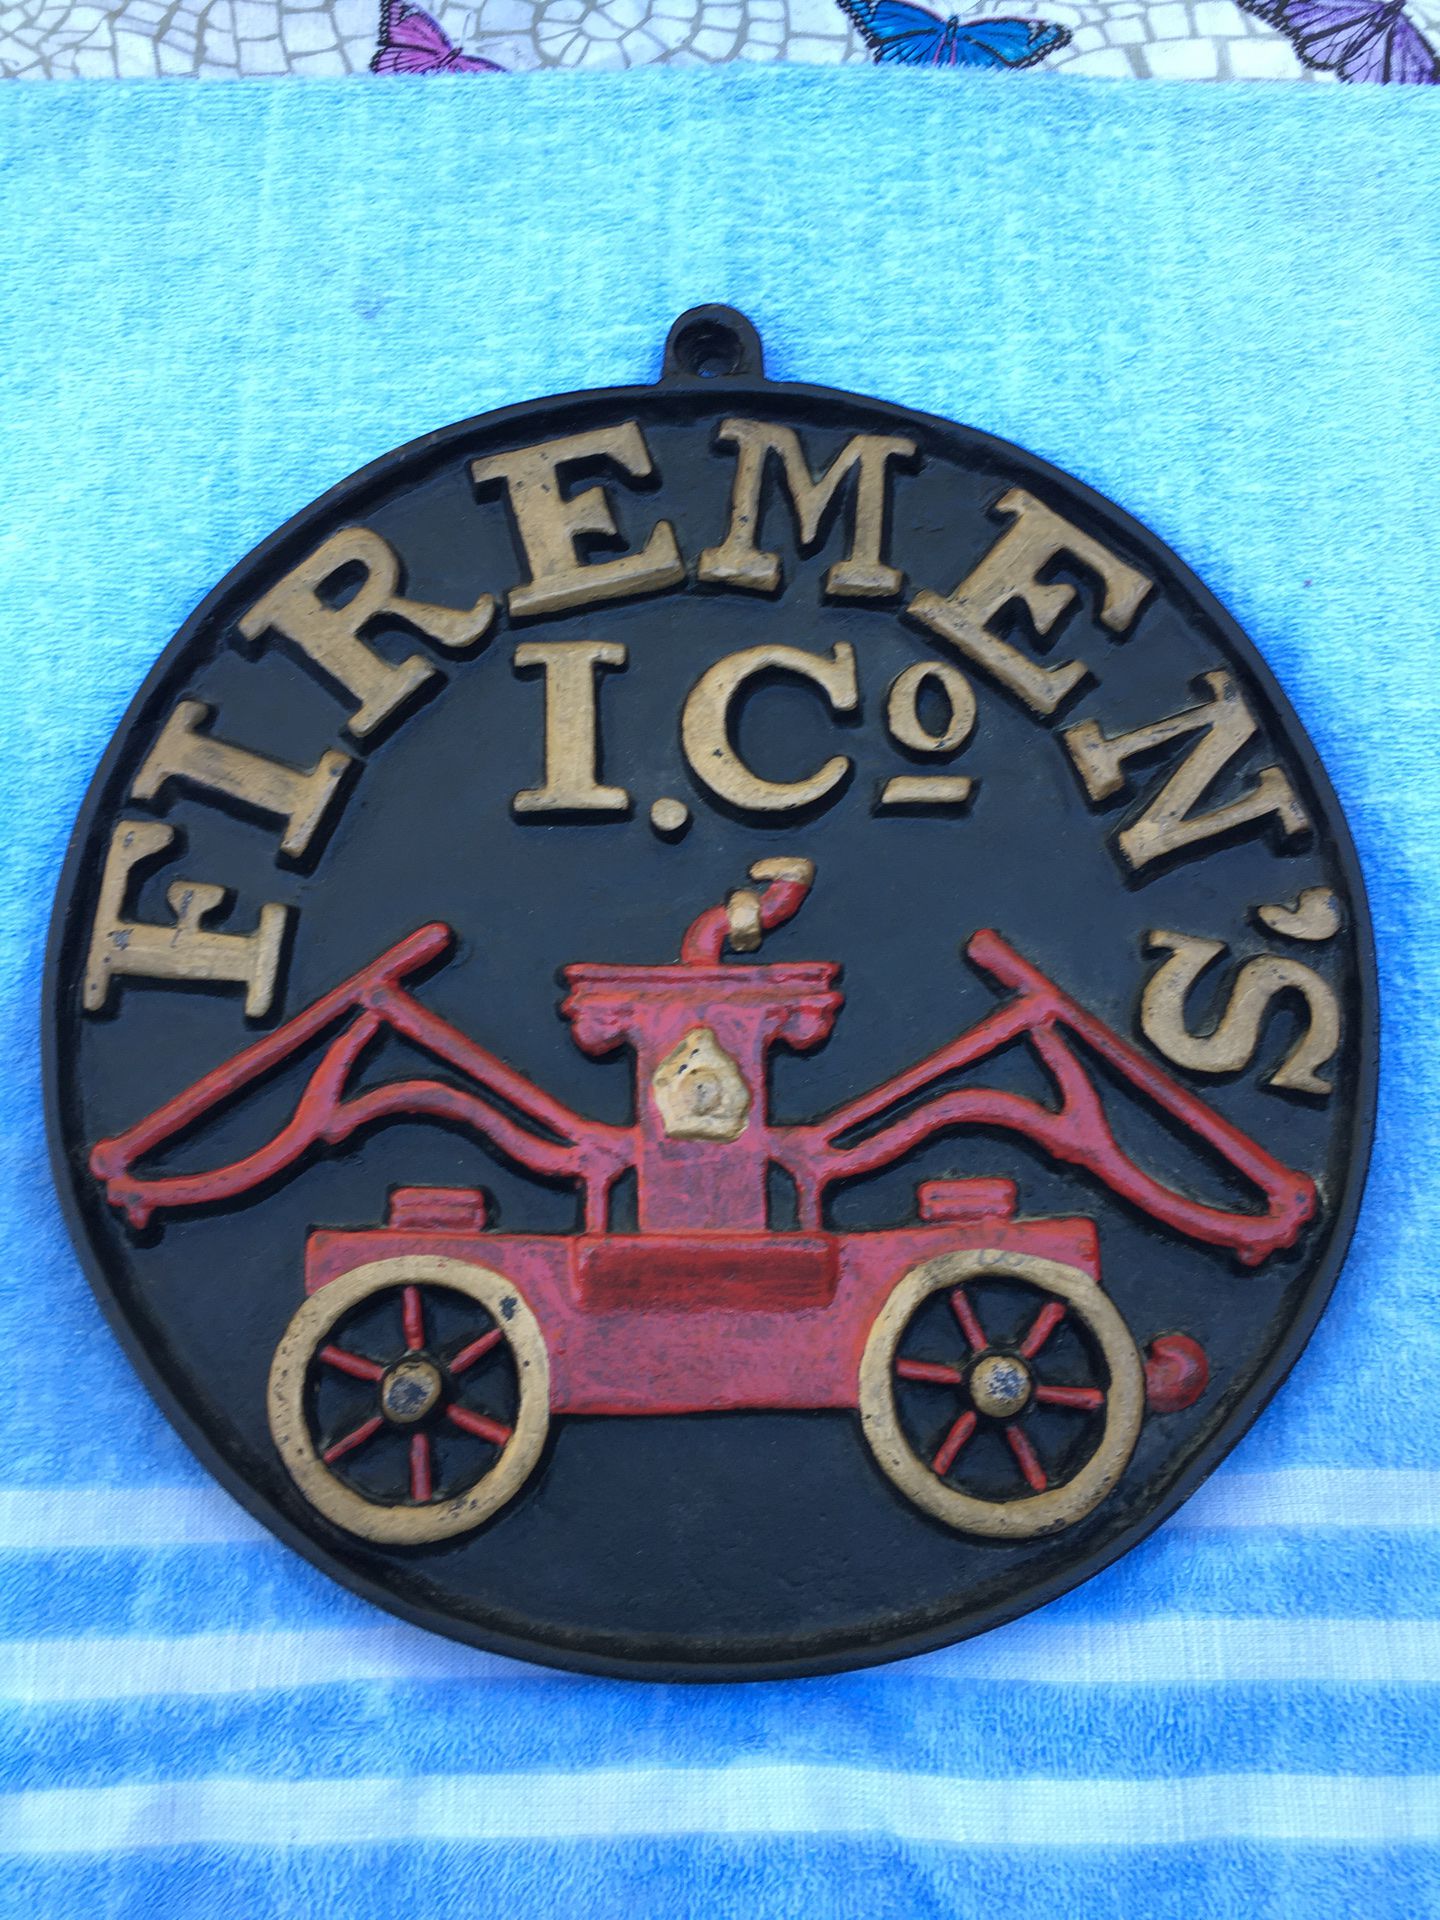 Antique firemen’s insurance company sign